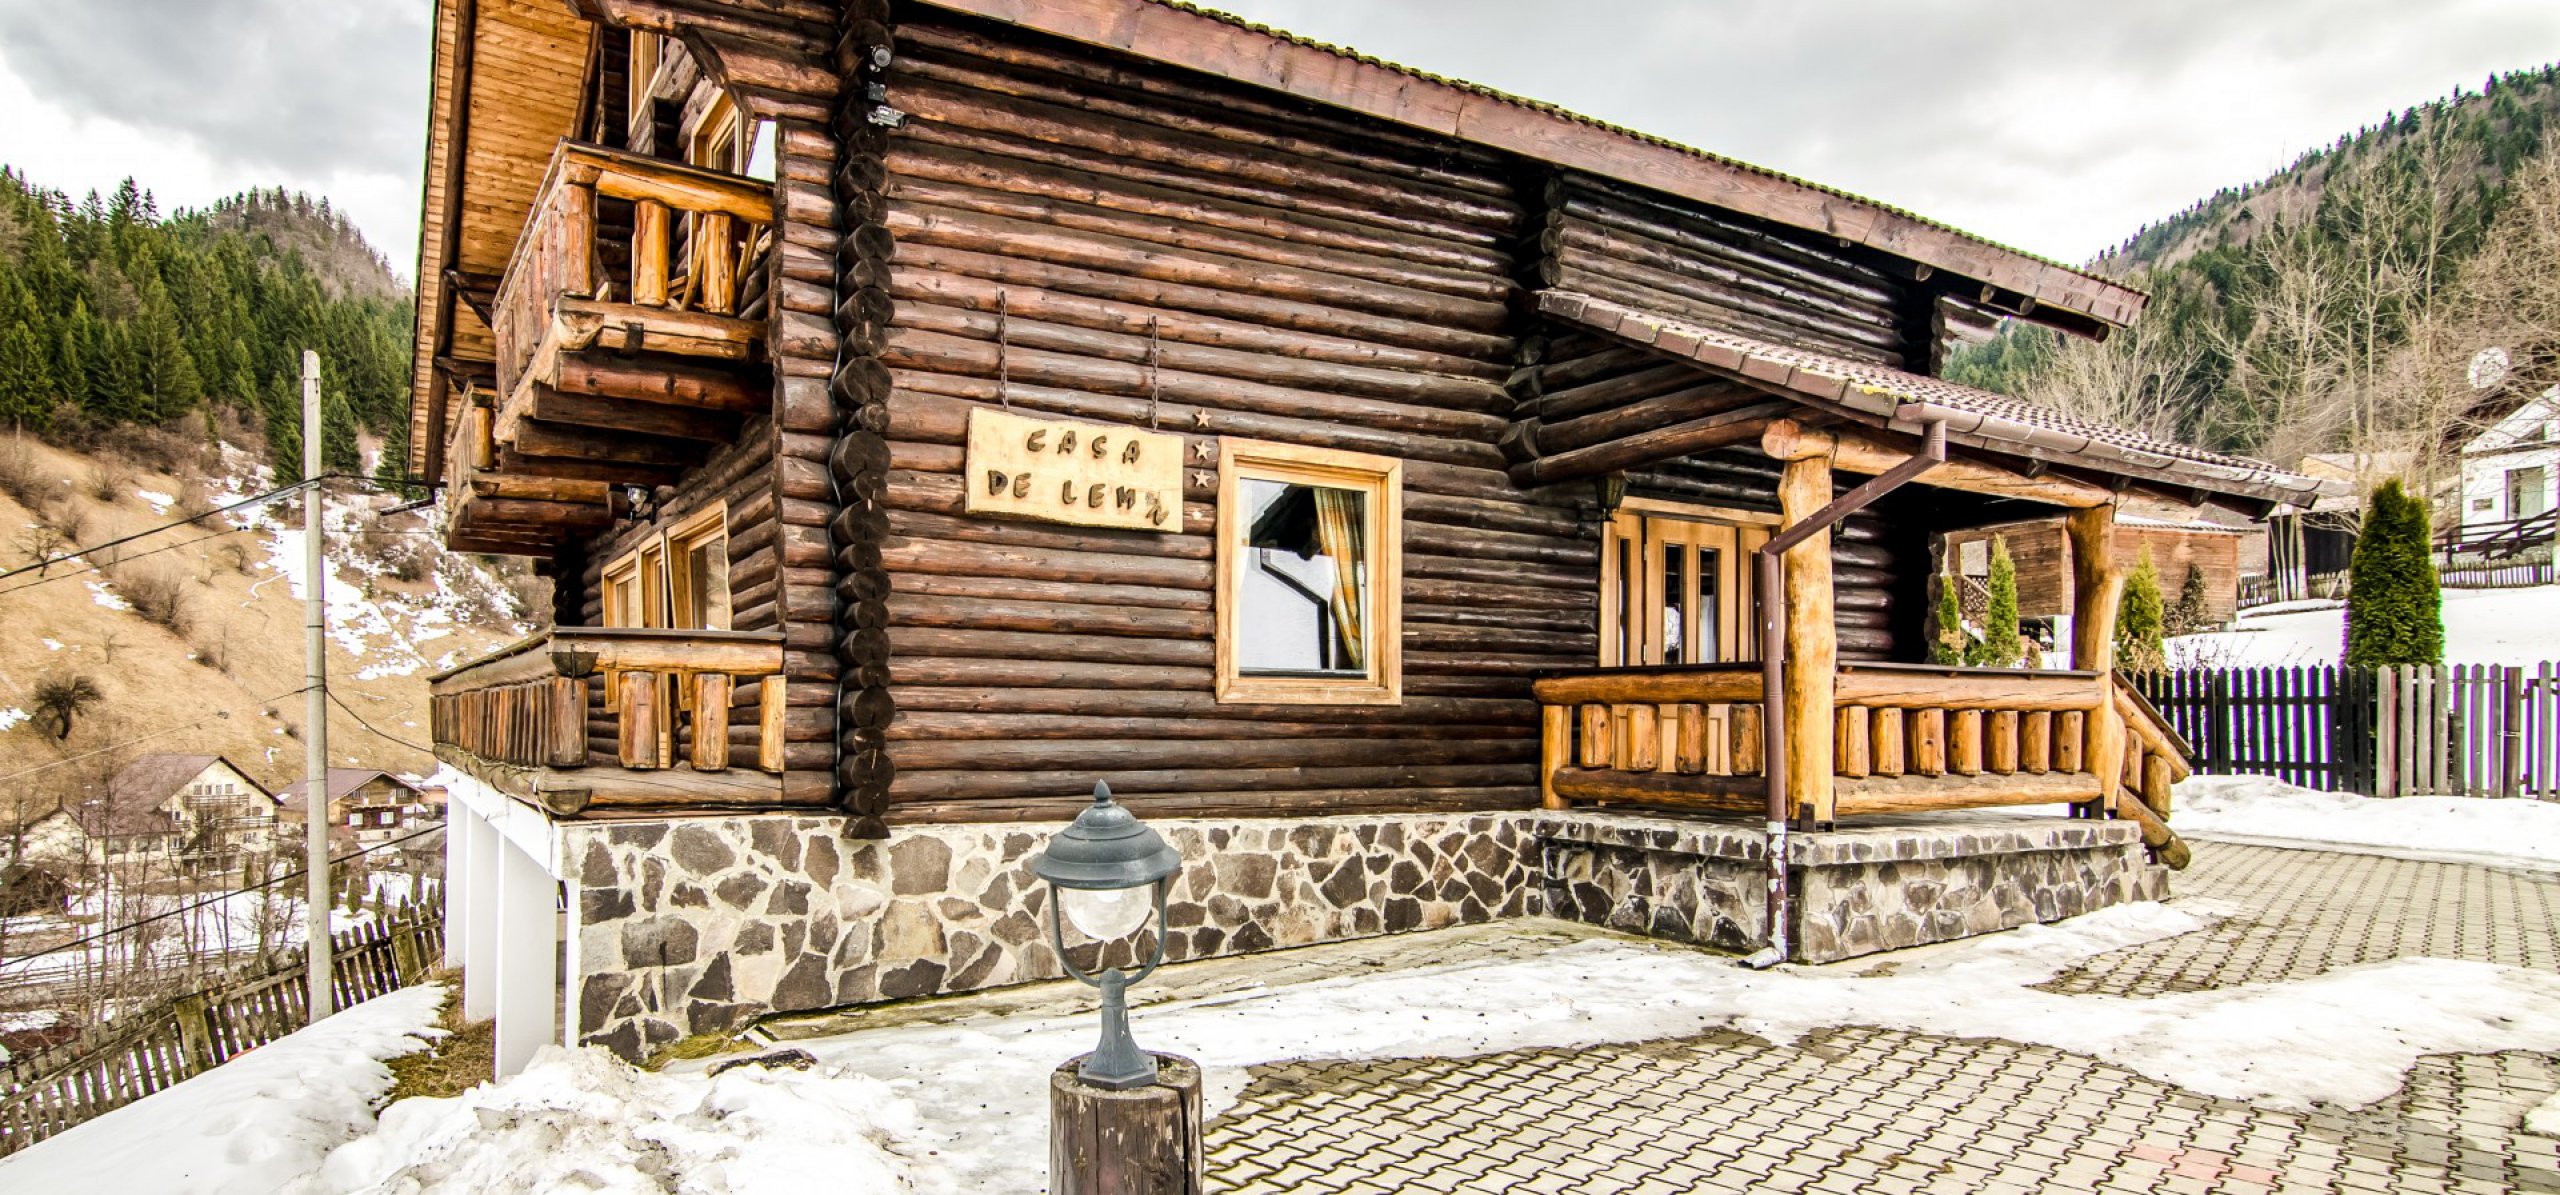 vila-de-lemn-iarna-cazare-in-moeciu